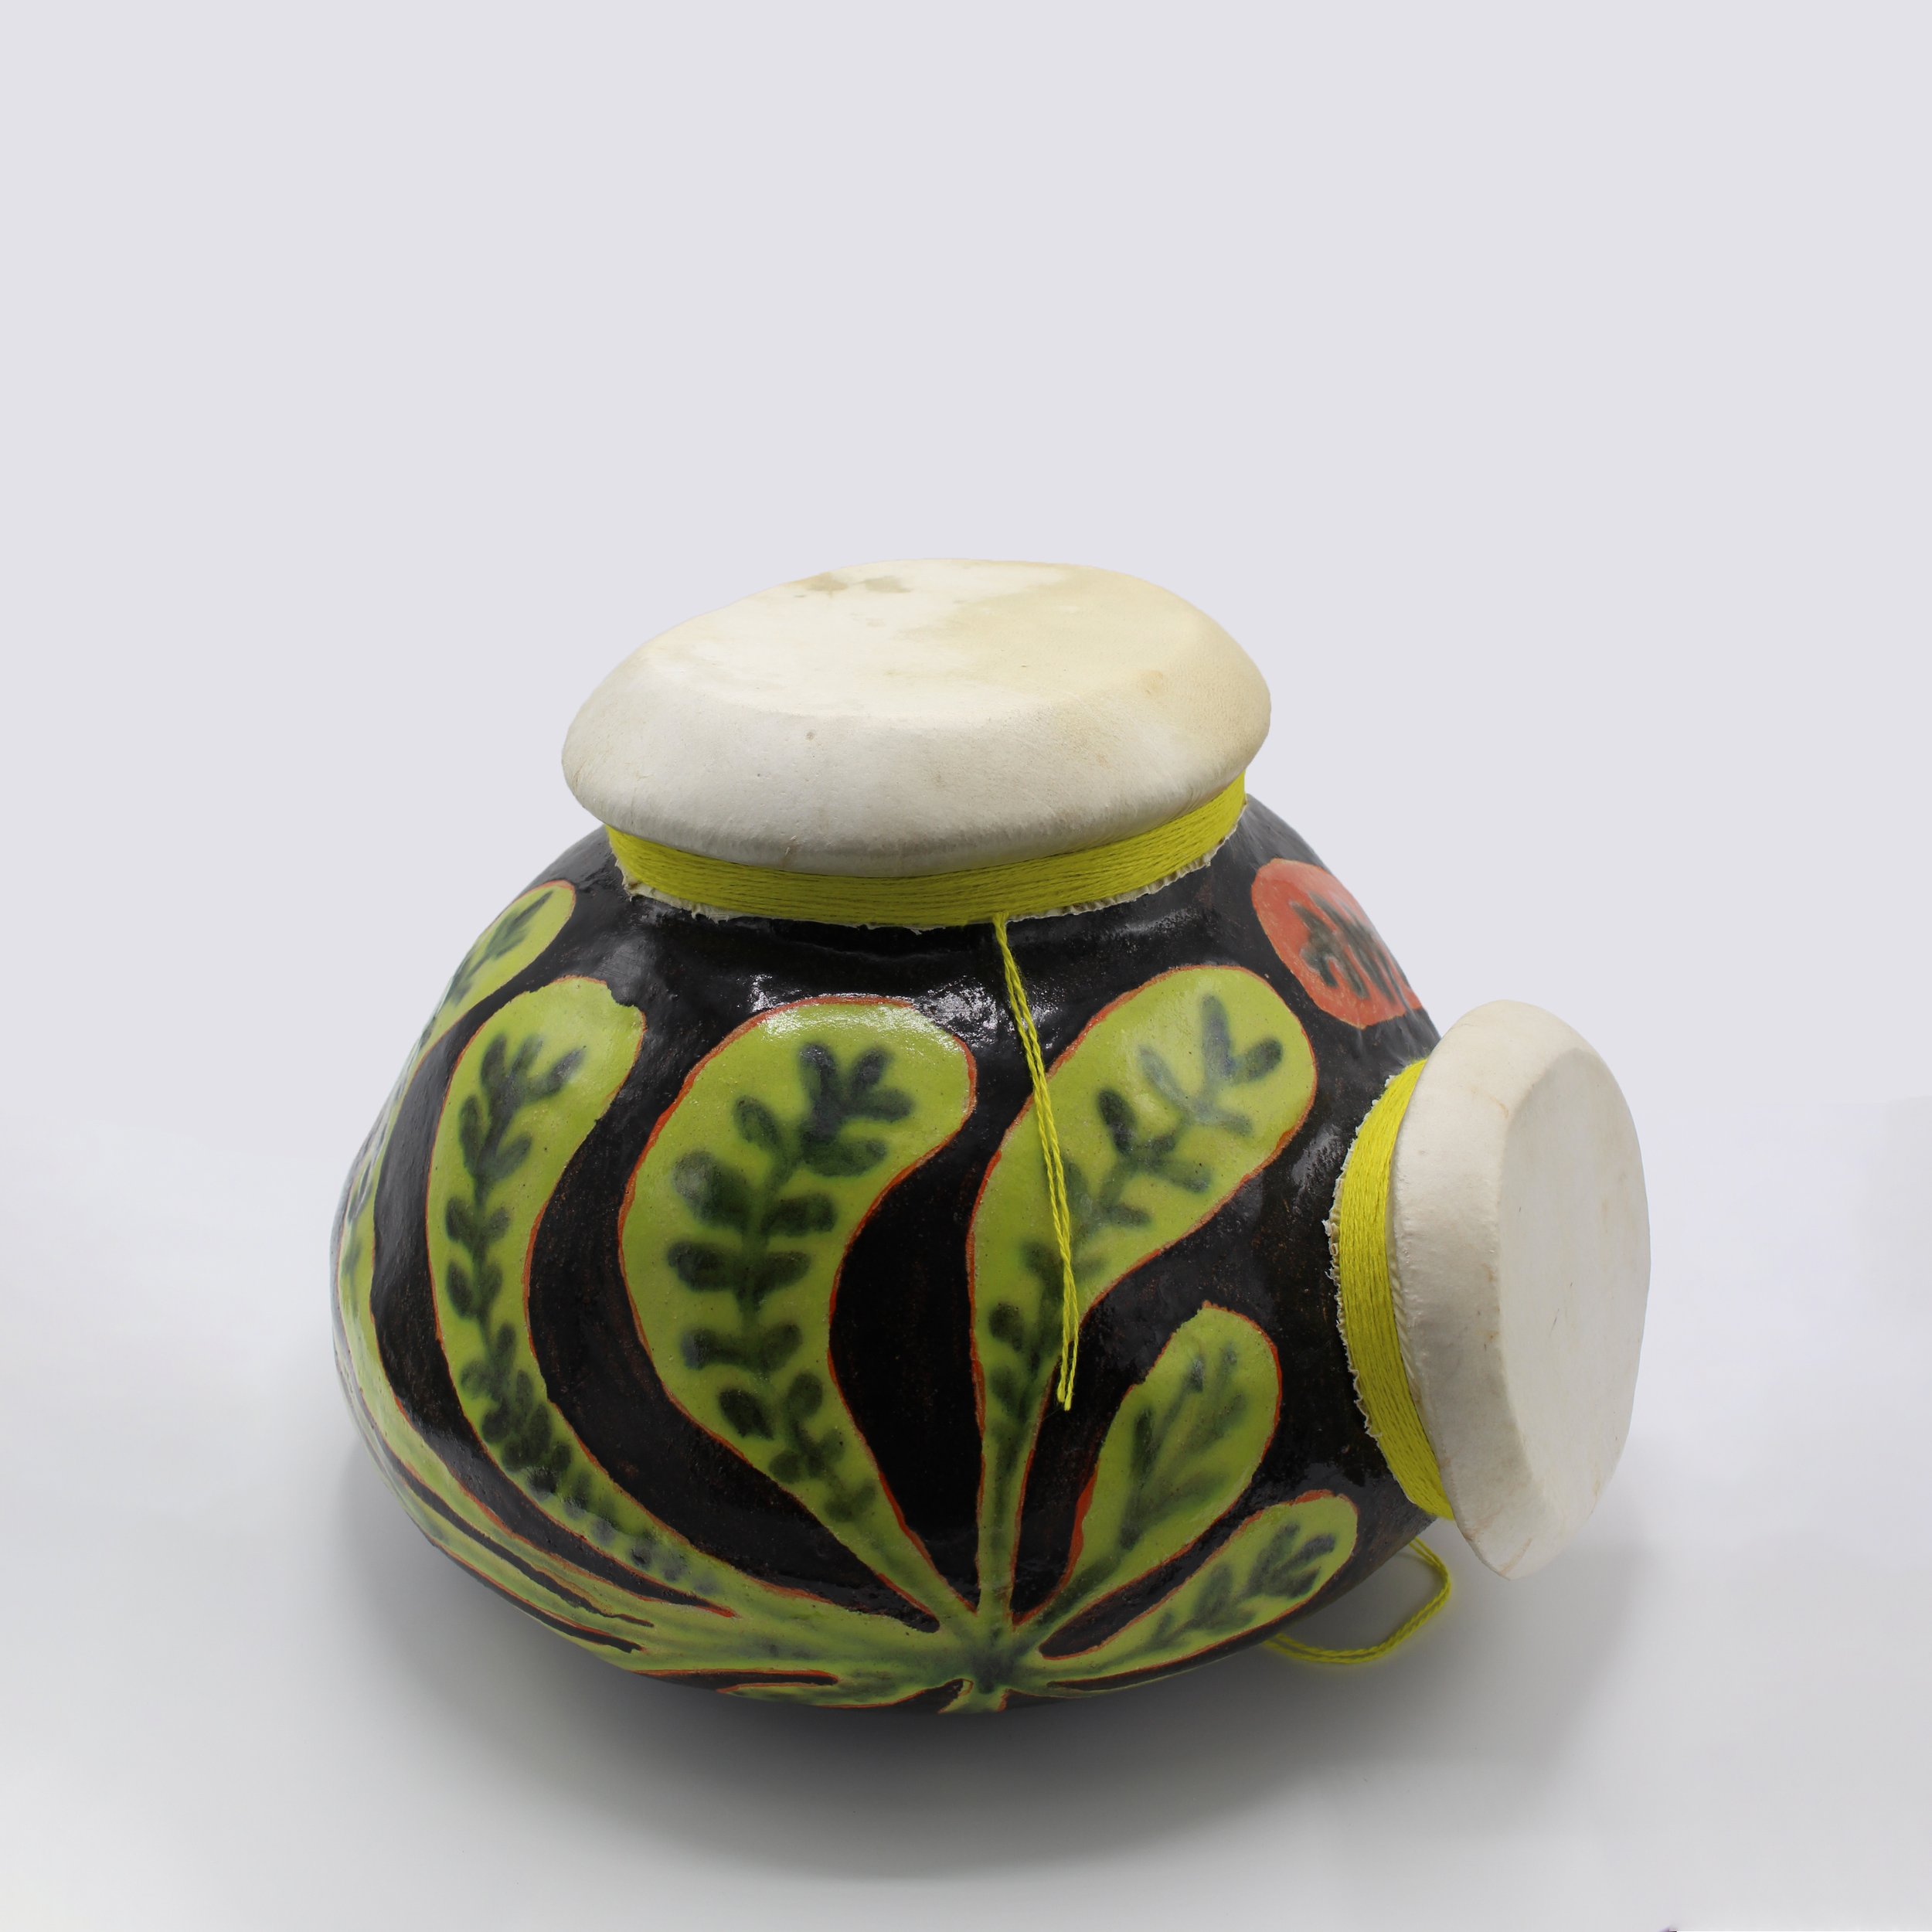 CatalanoUsa – The Essence of Ceramics